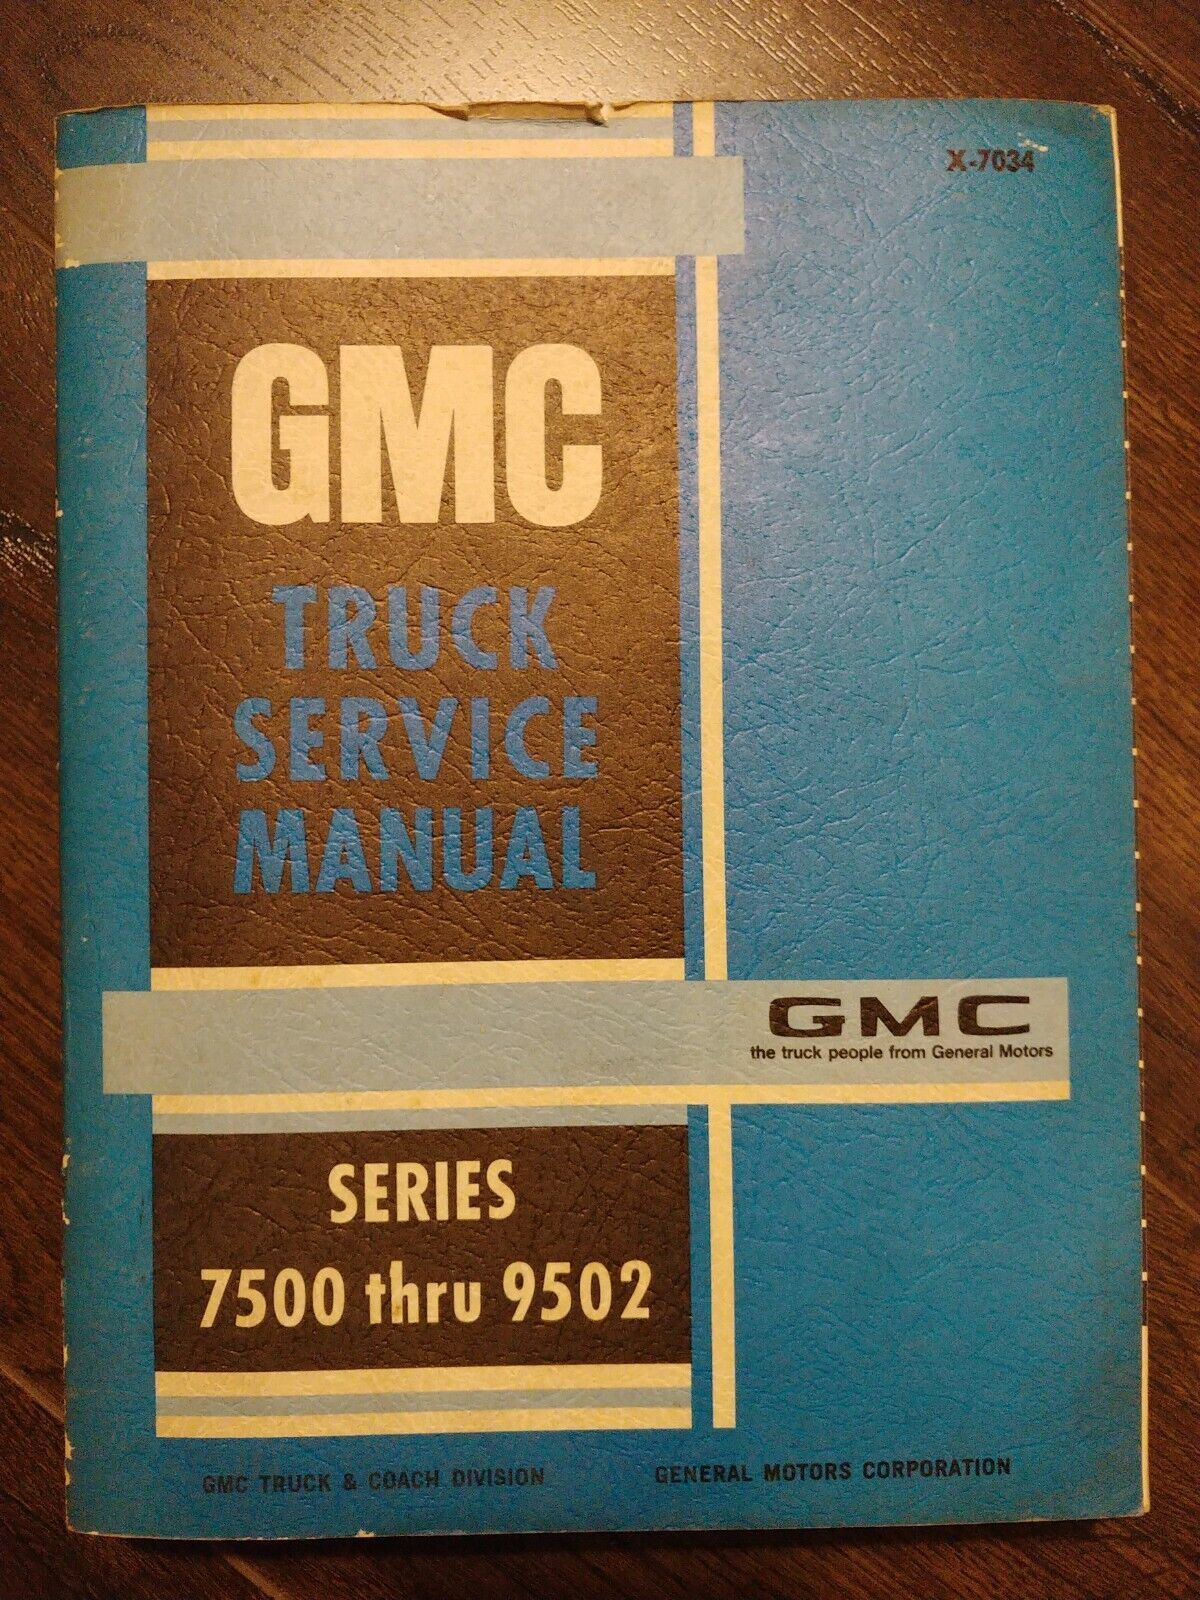 1969 GMC Truck Service Manual X-7034 Series 7500-9502